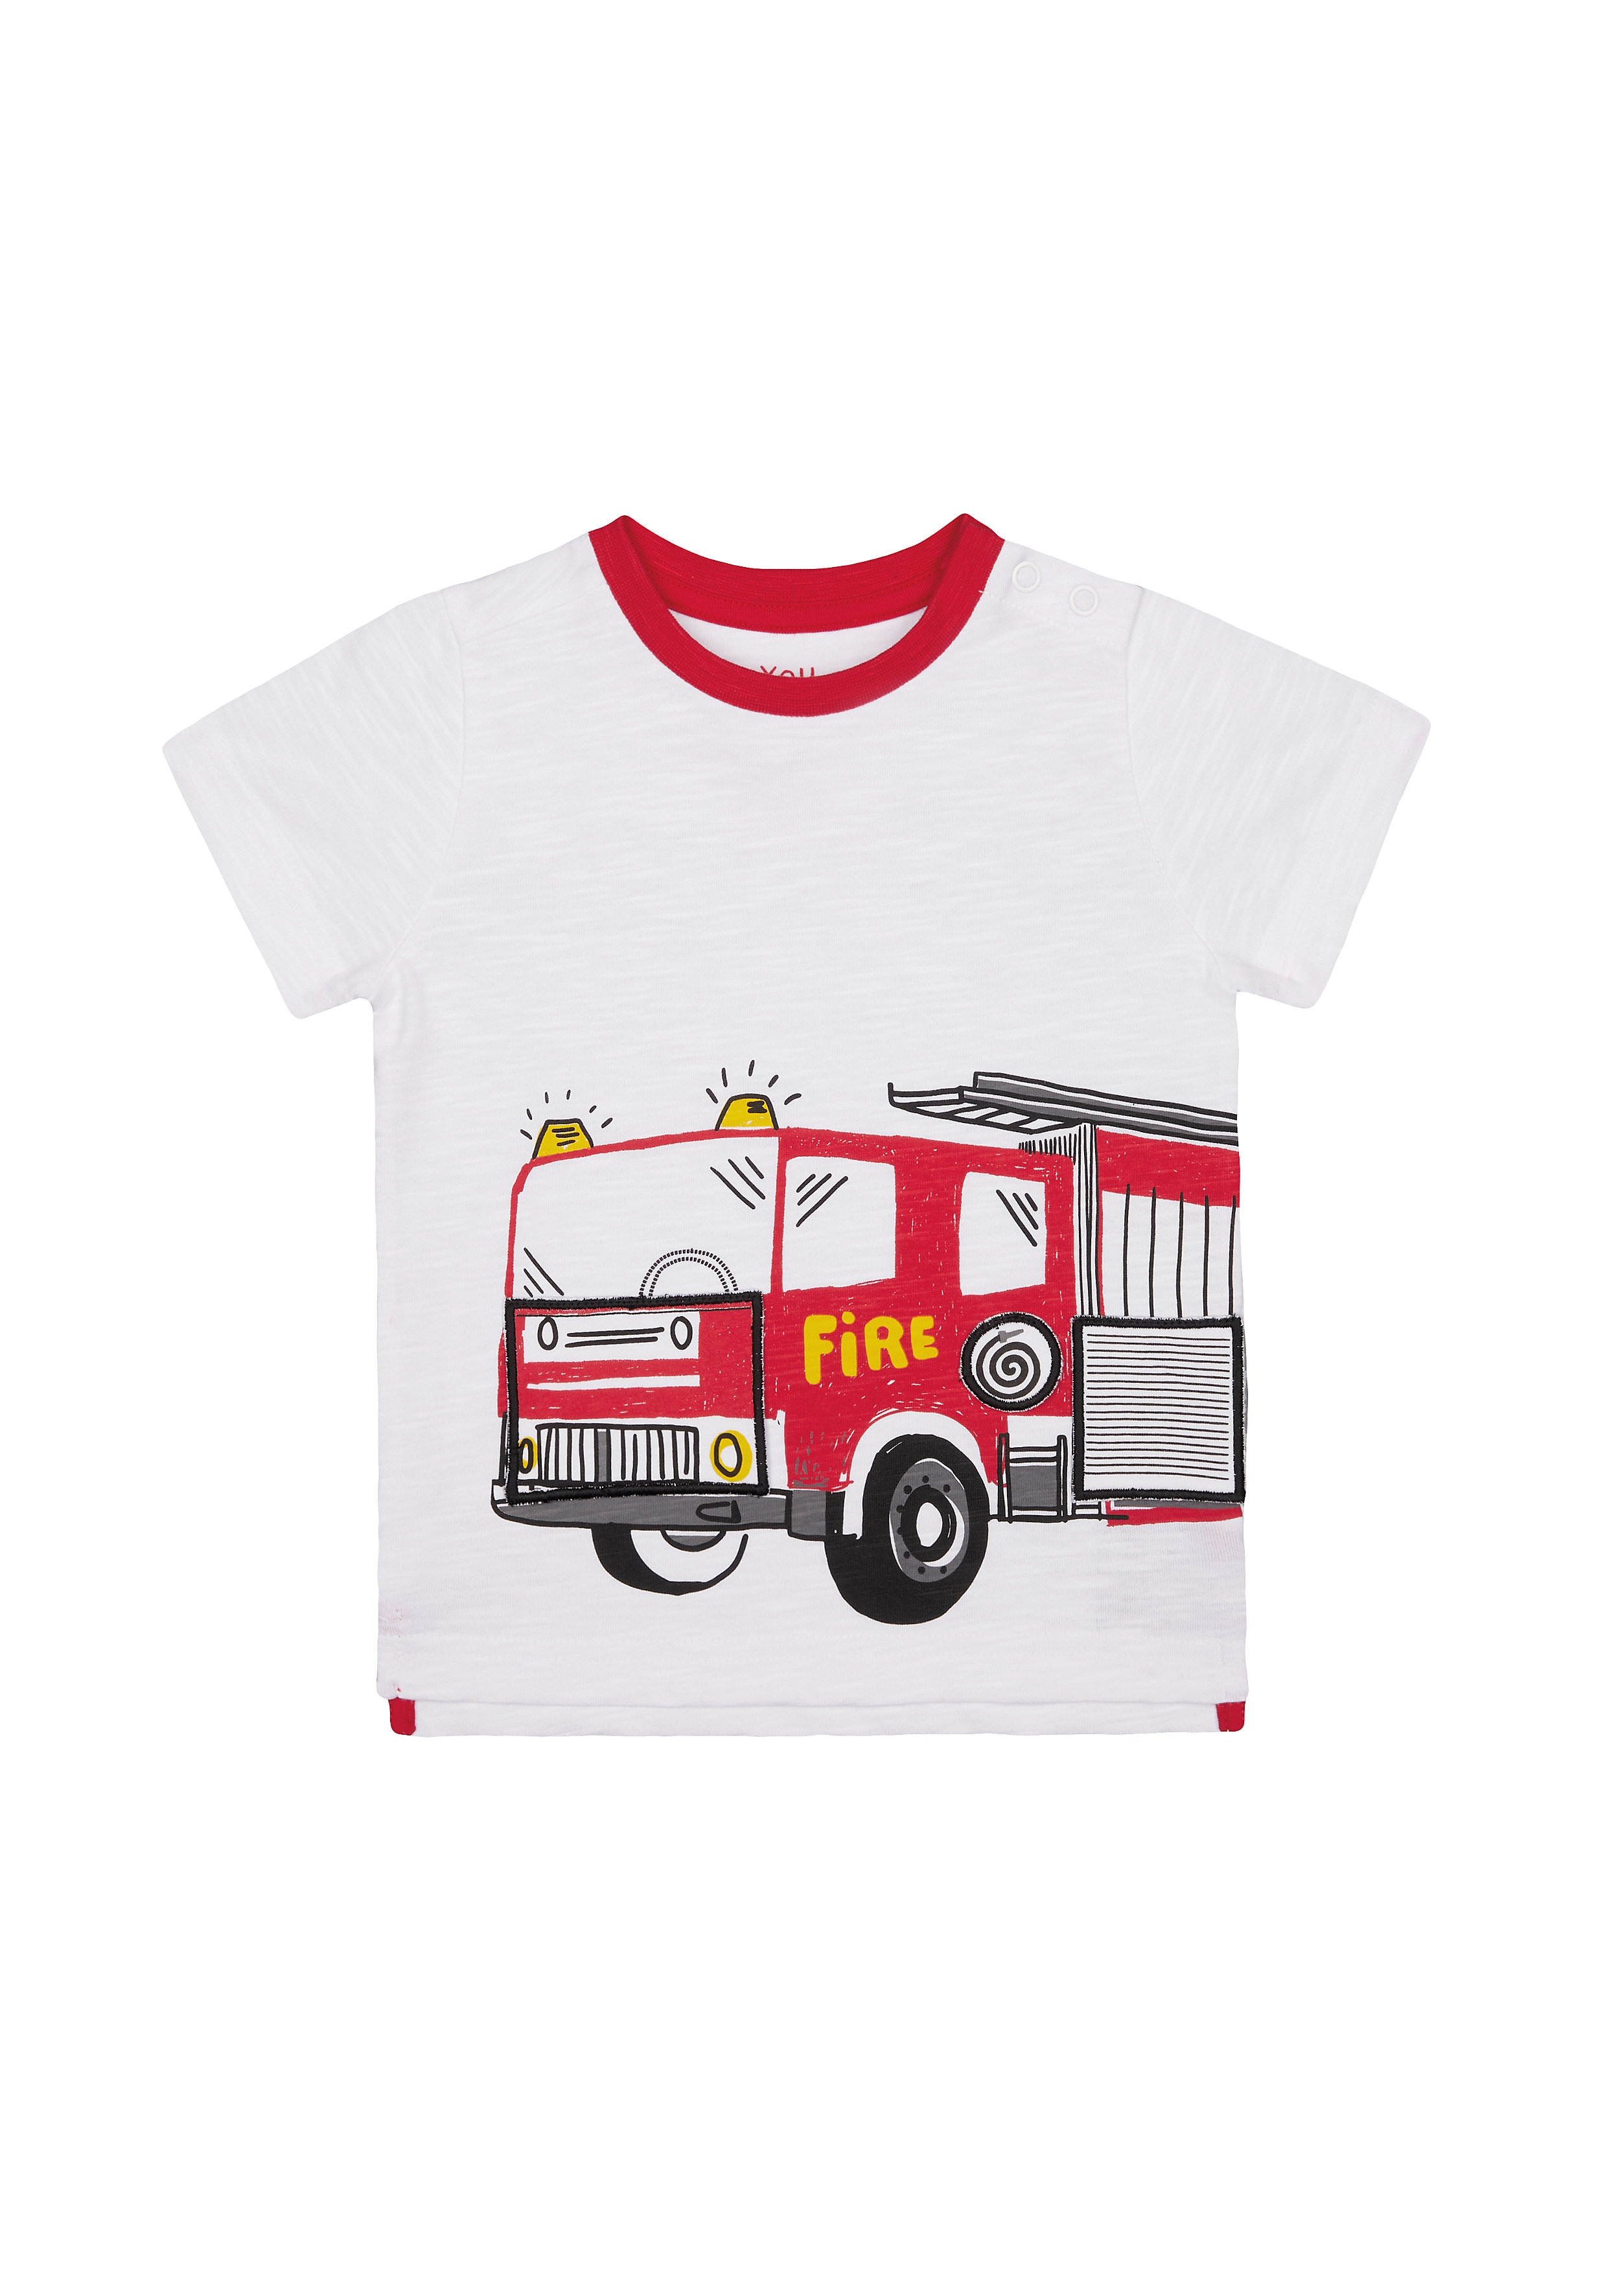 Boys Half Sleeves T-Shirt Lift-The-Flap Fire Engine Design - White